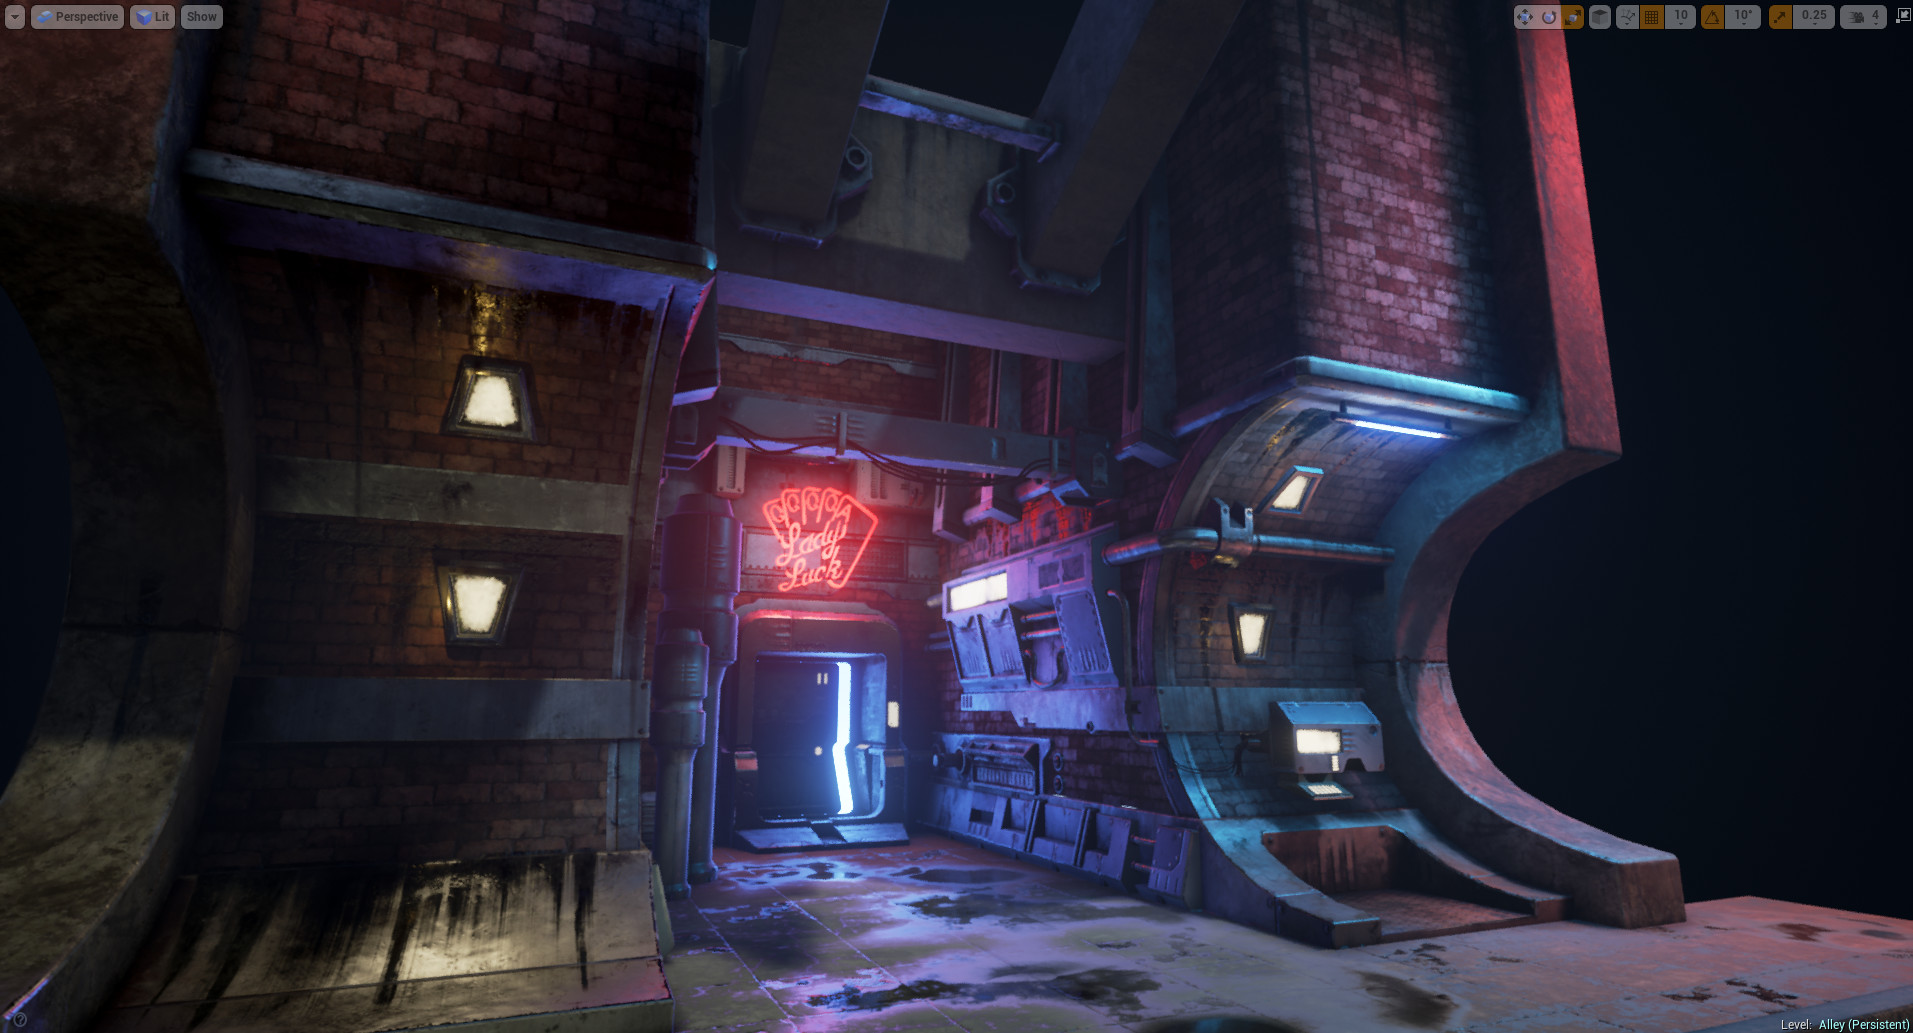 ArtStation - 3D Cyberpunk Alley Environment in Unreal Engine